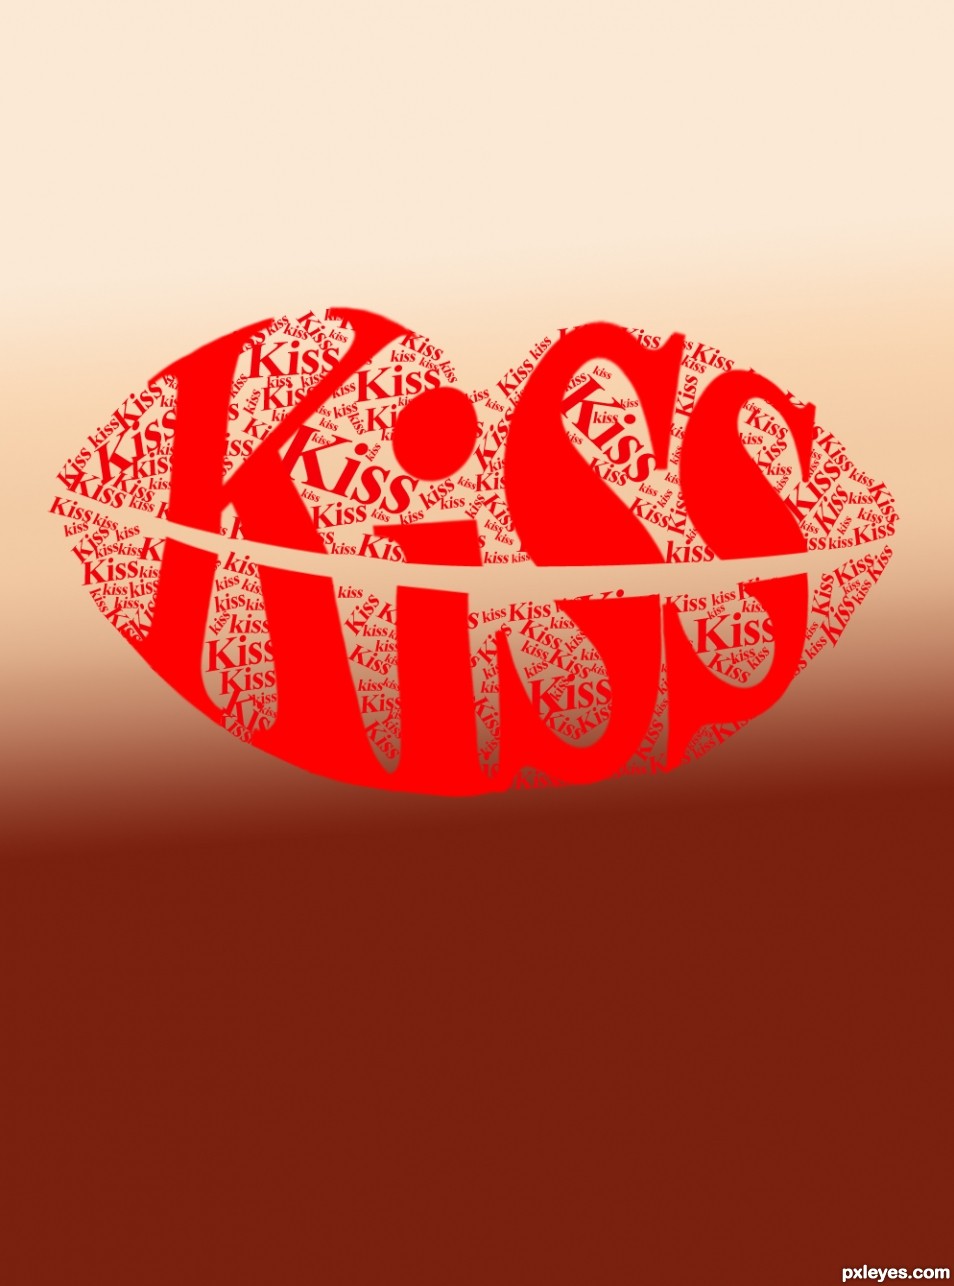 Creation of Kiss Kiss xoxo: Step 3